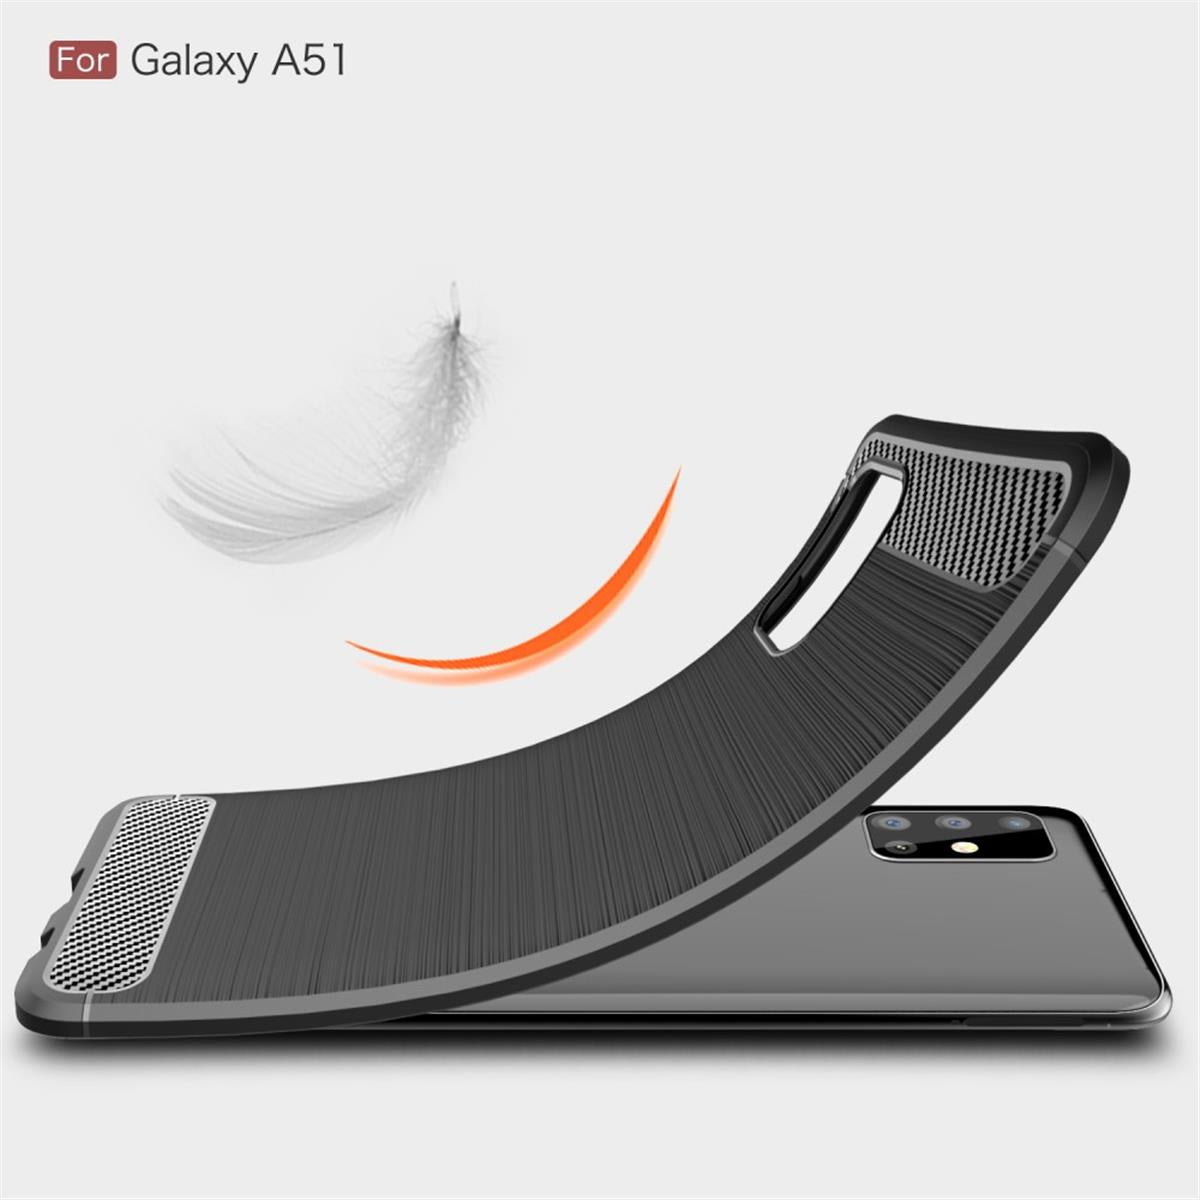 Hülle für Samsung Galaxy A51 Handyhülle Silikon Case Schutzhülle Carbon Farben